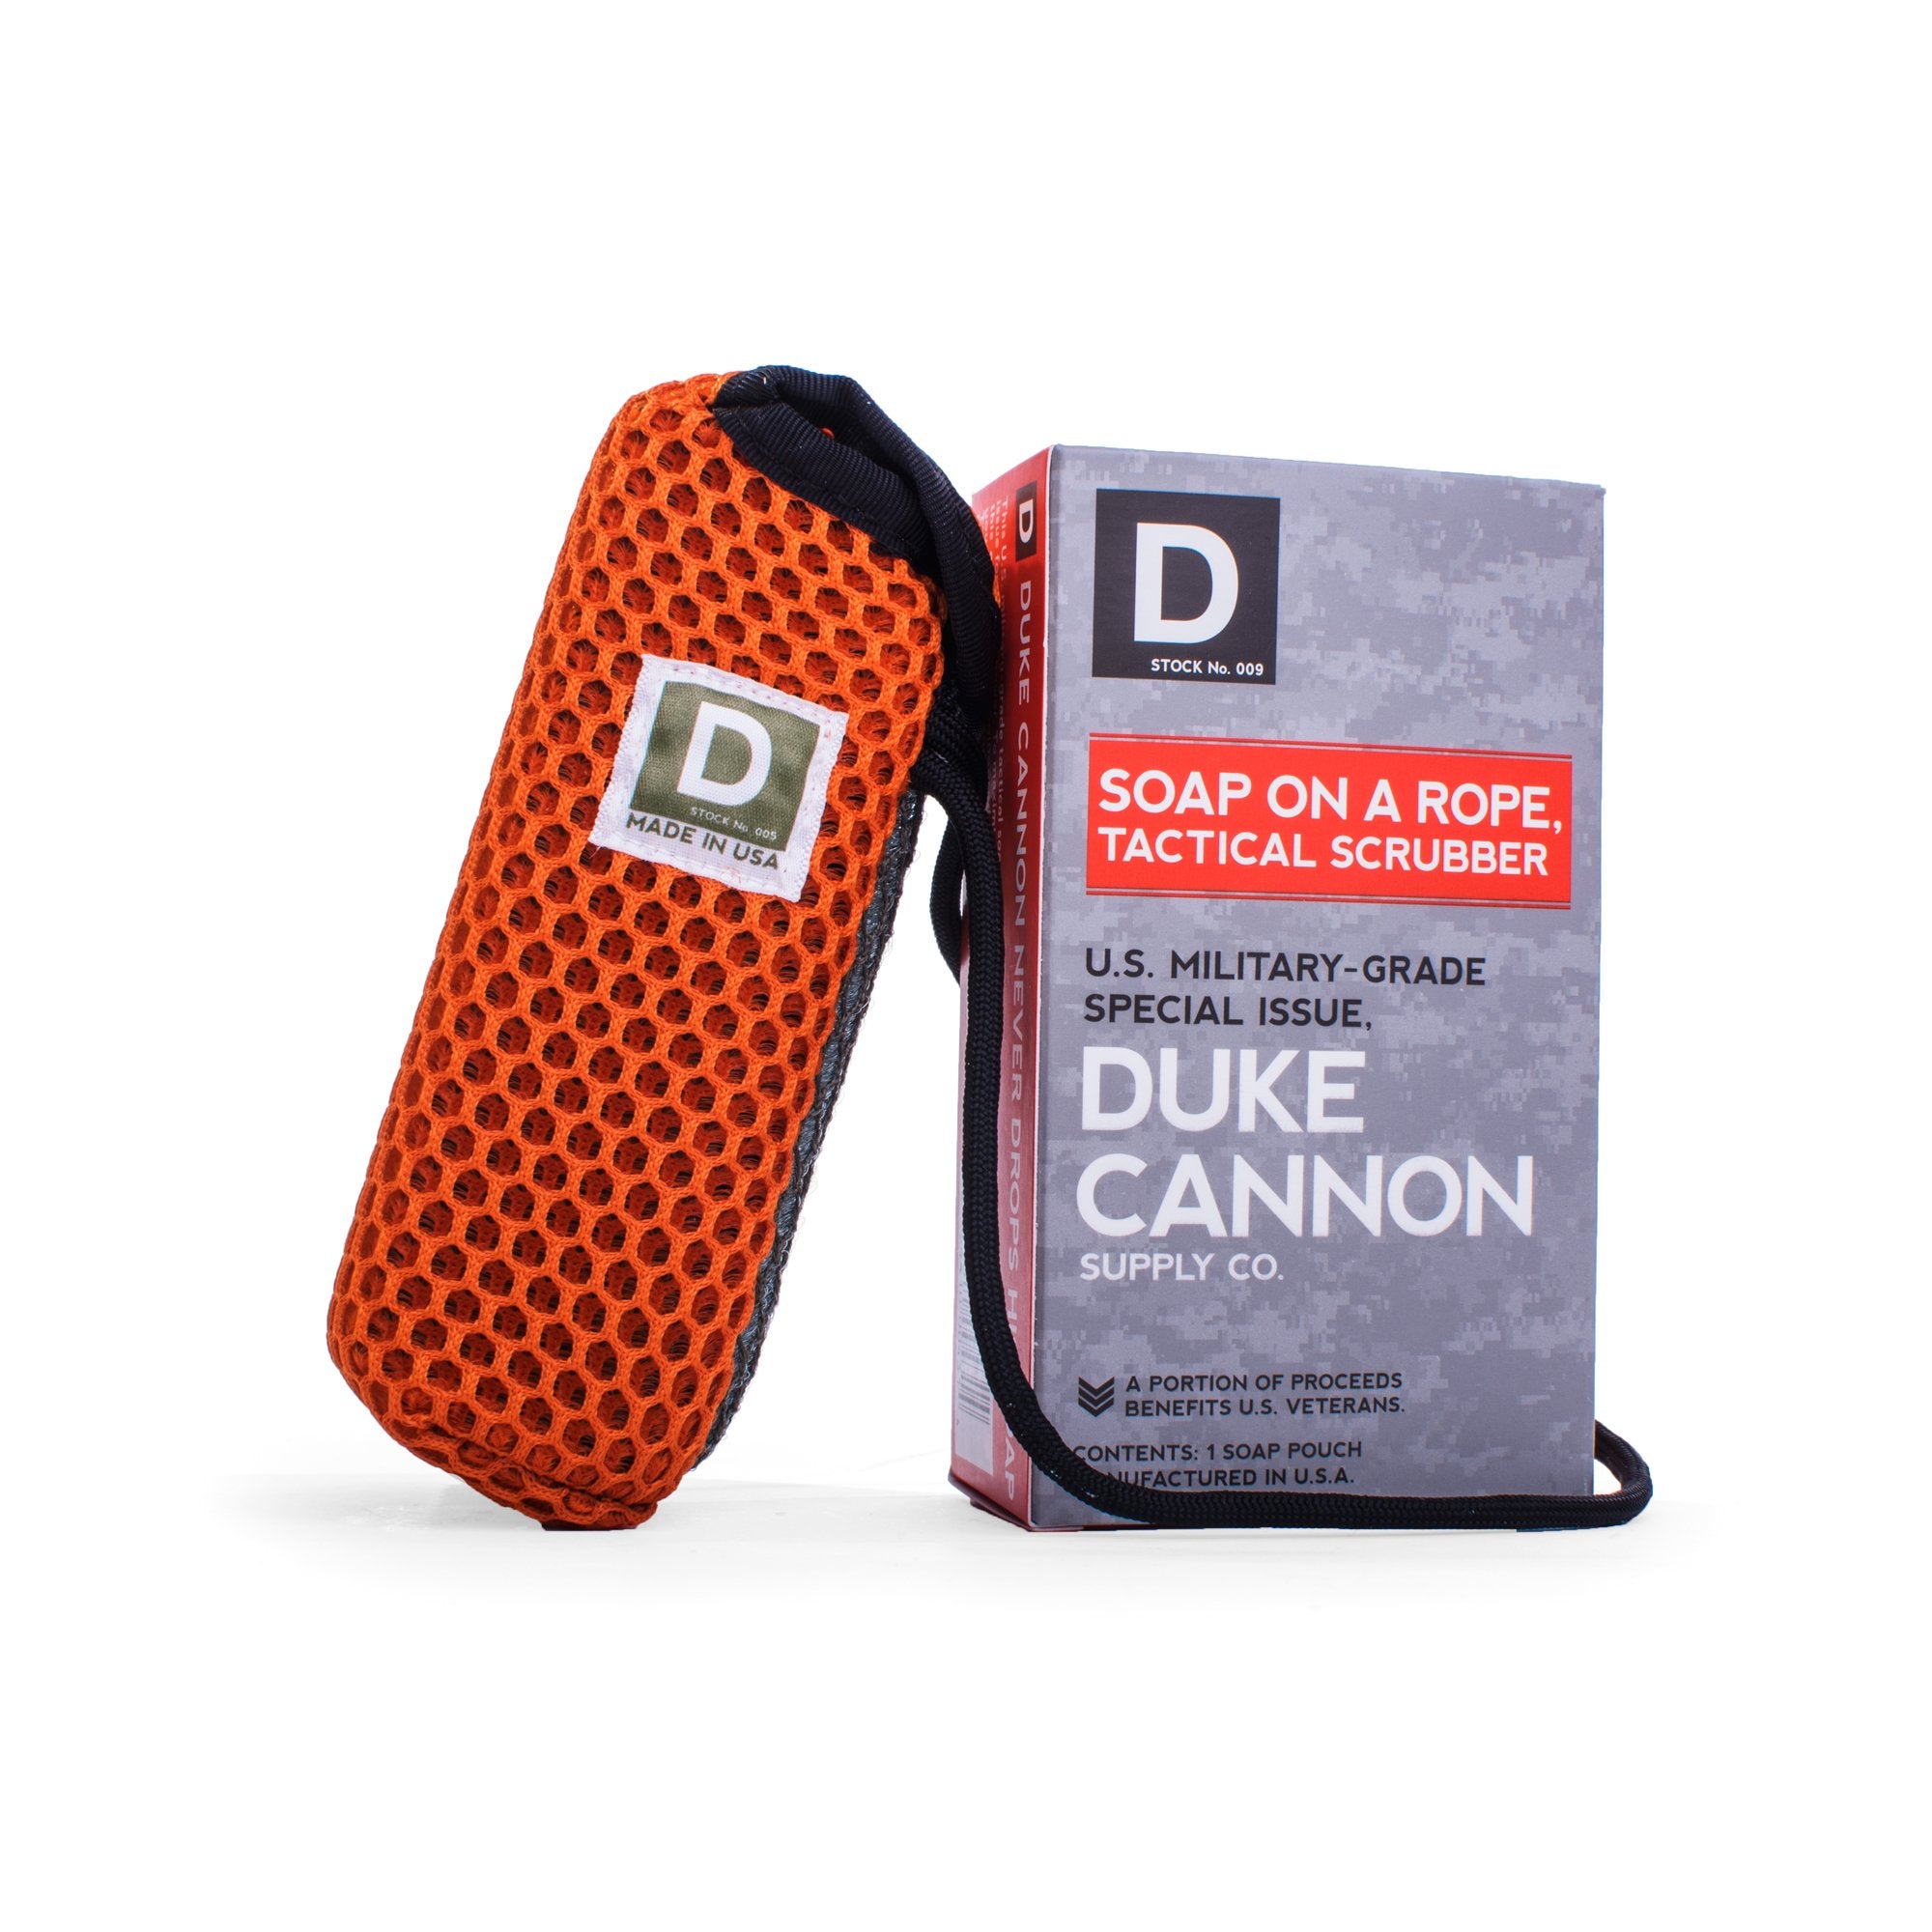 Duke Cannon Soap on a Rope